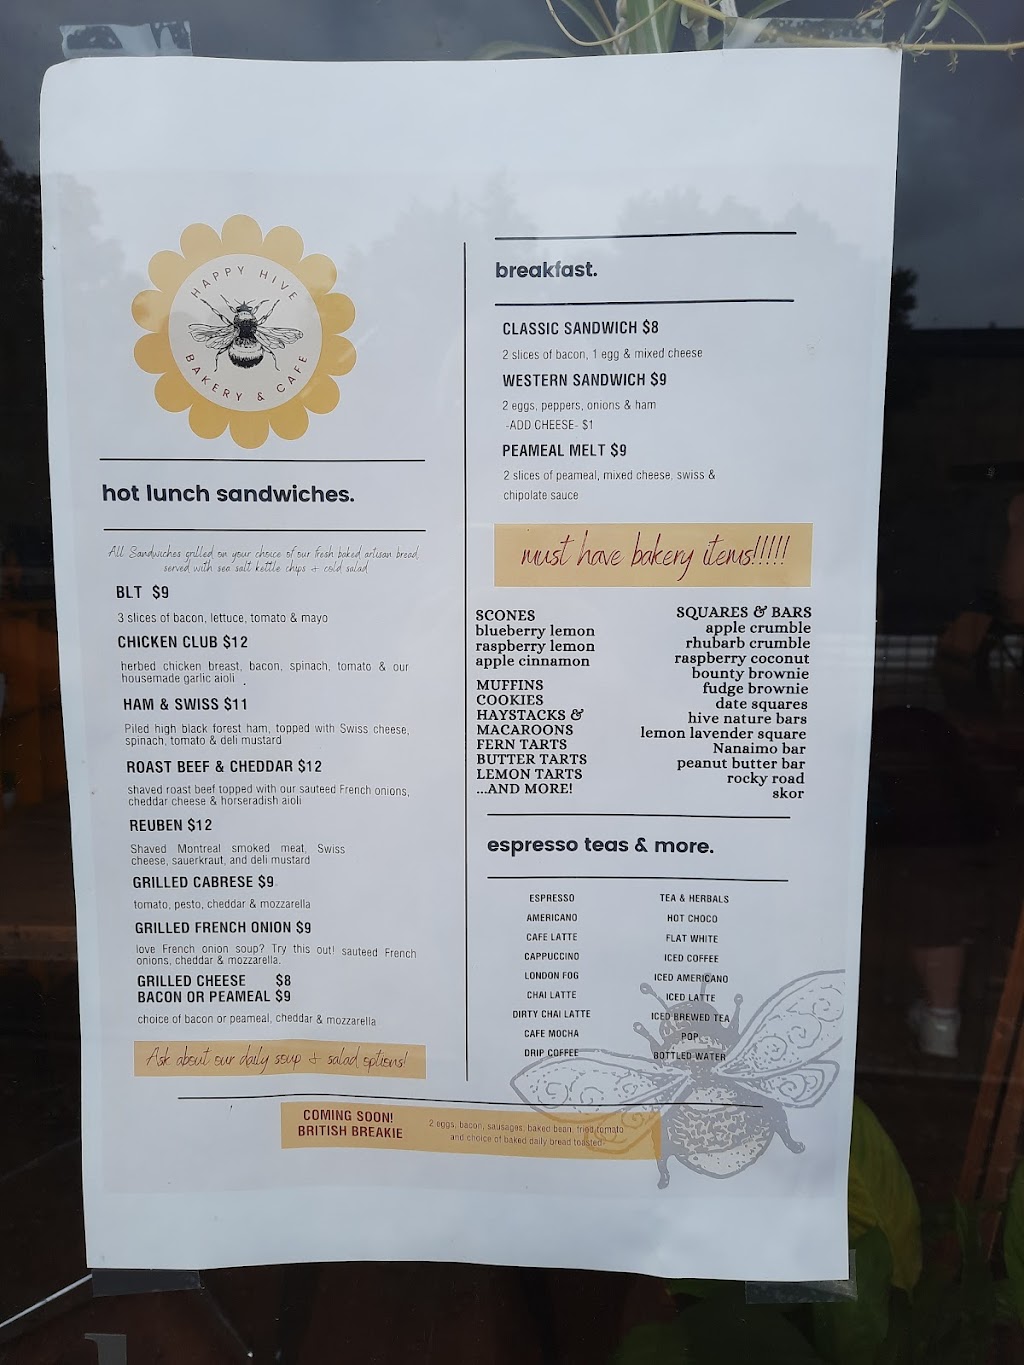 Happy Hive Bakery & Cafe | 328 Queen St N, Paisley, ON N0G 2N0, Canada | Phone: (519) 353-5542